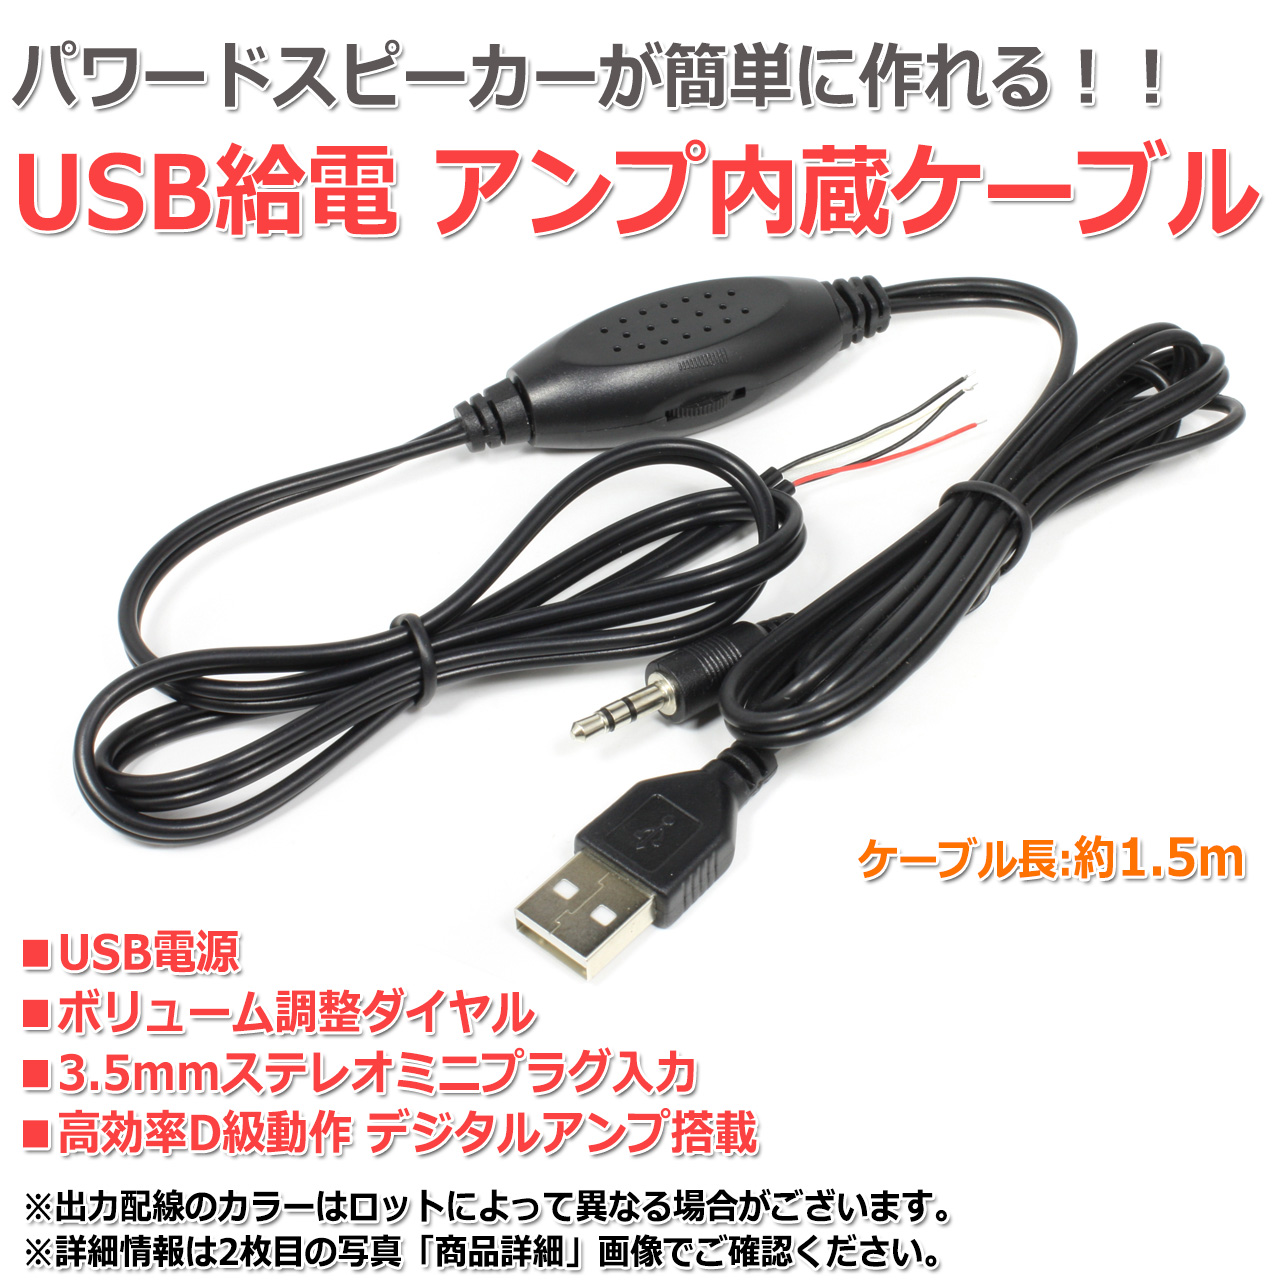 USB給電 デジタルアンプ内蔵オーディオケーブル[1.5m] 3.5mmステレオミニプラグ入力 ボリューム調整付き :O552:NFJストア  ヤフーショッピング店 通販 